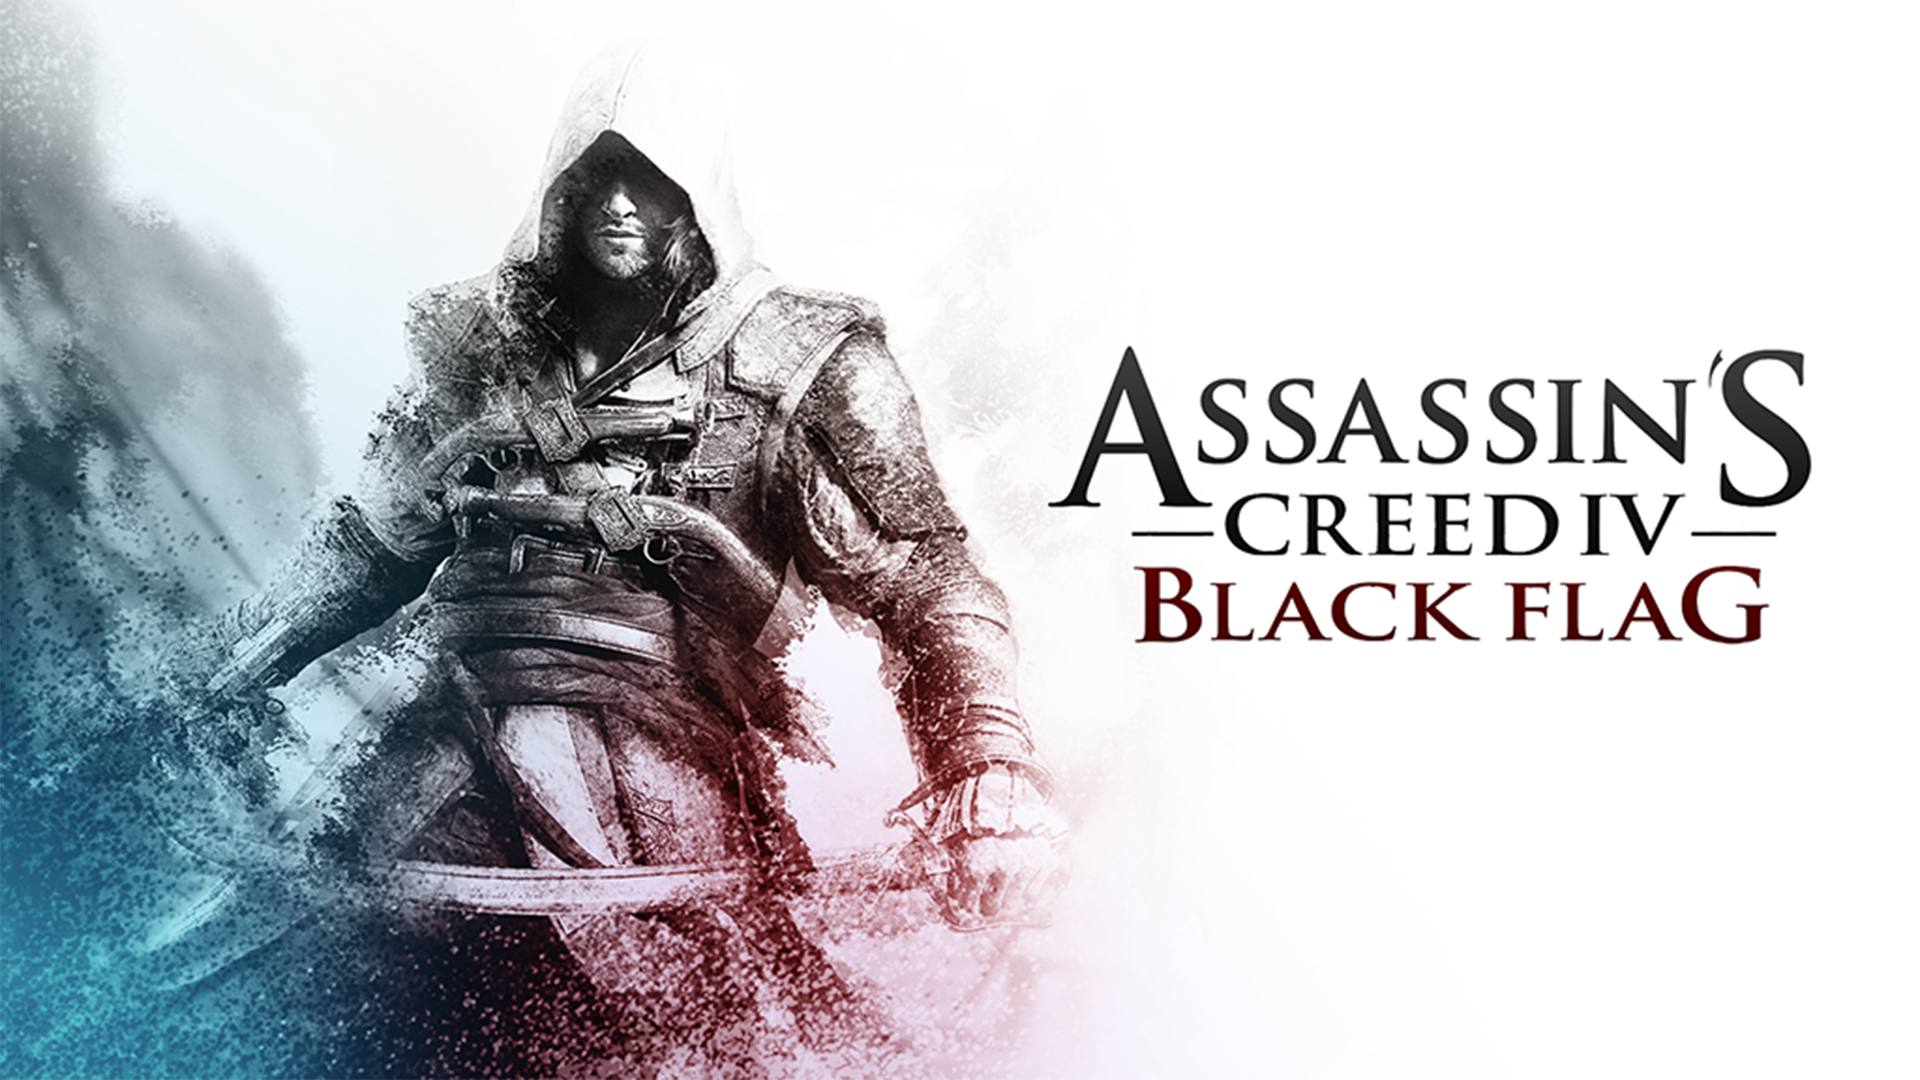 Абстерго индастриз. Assassin’s Creed IV: Black Flag #146.